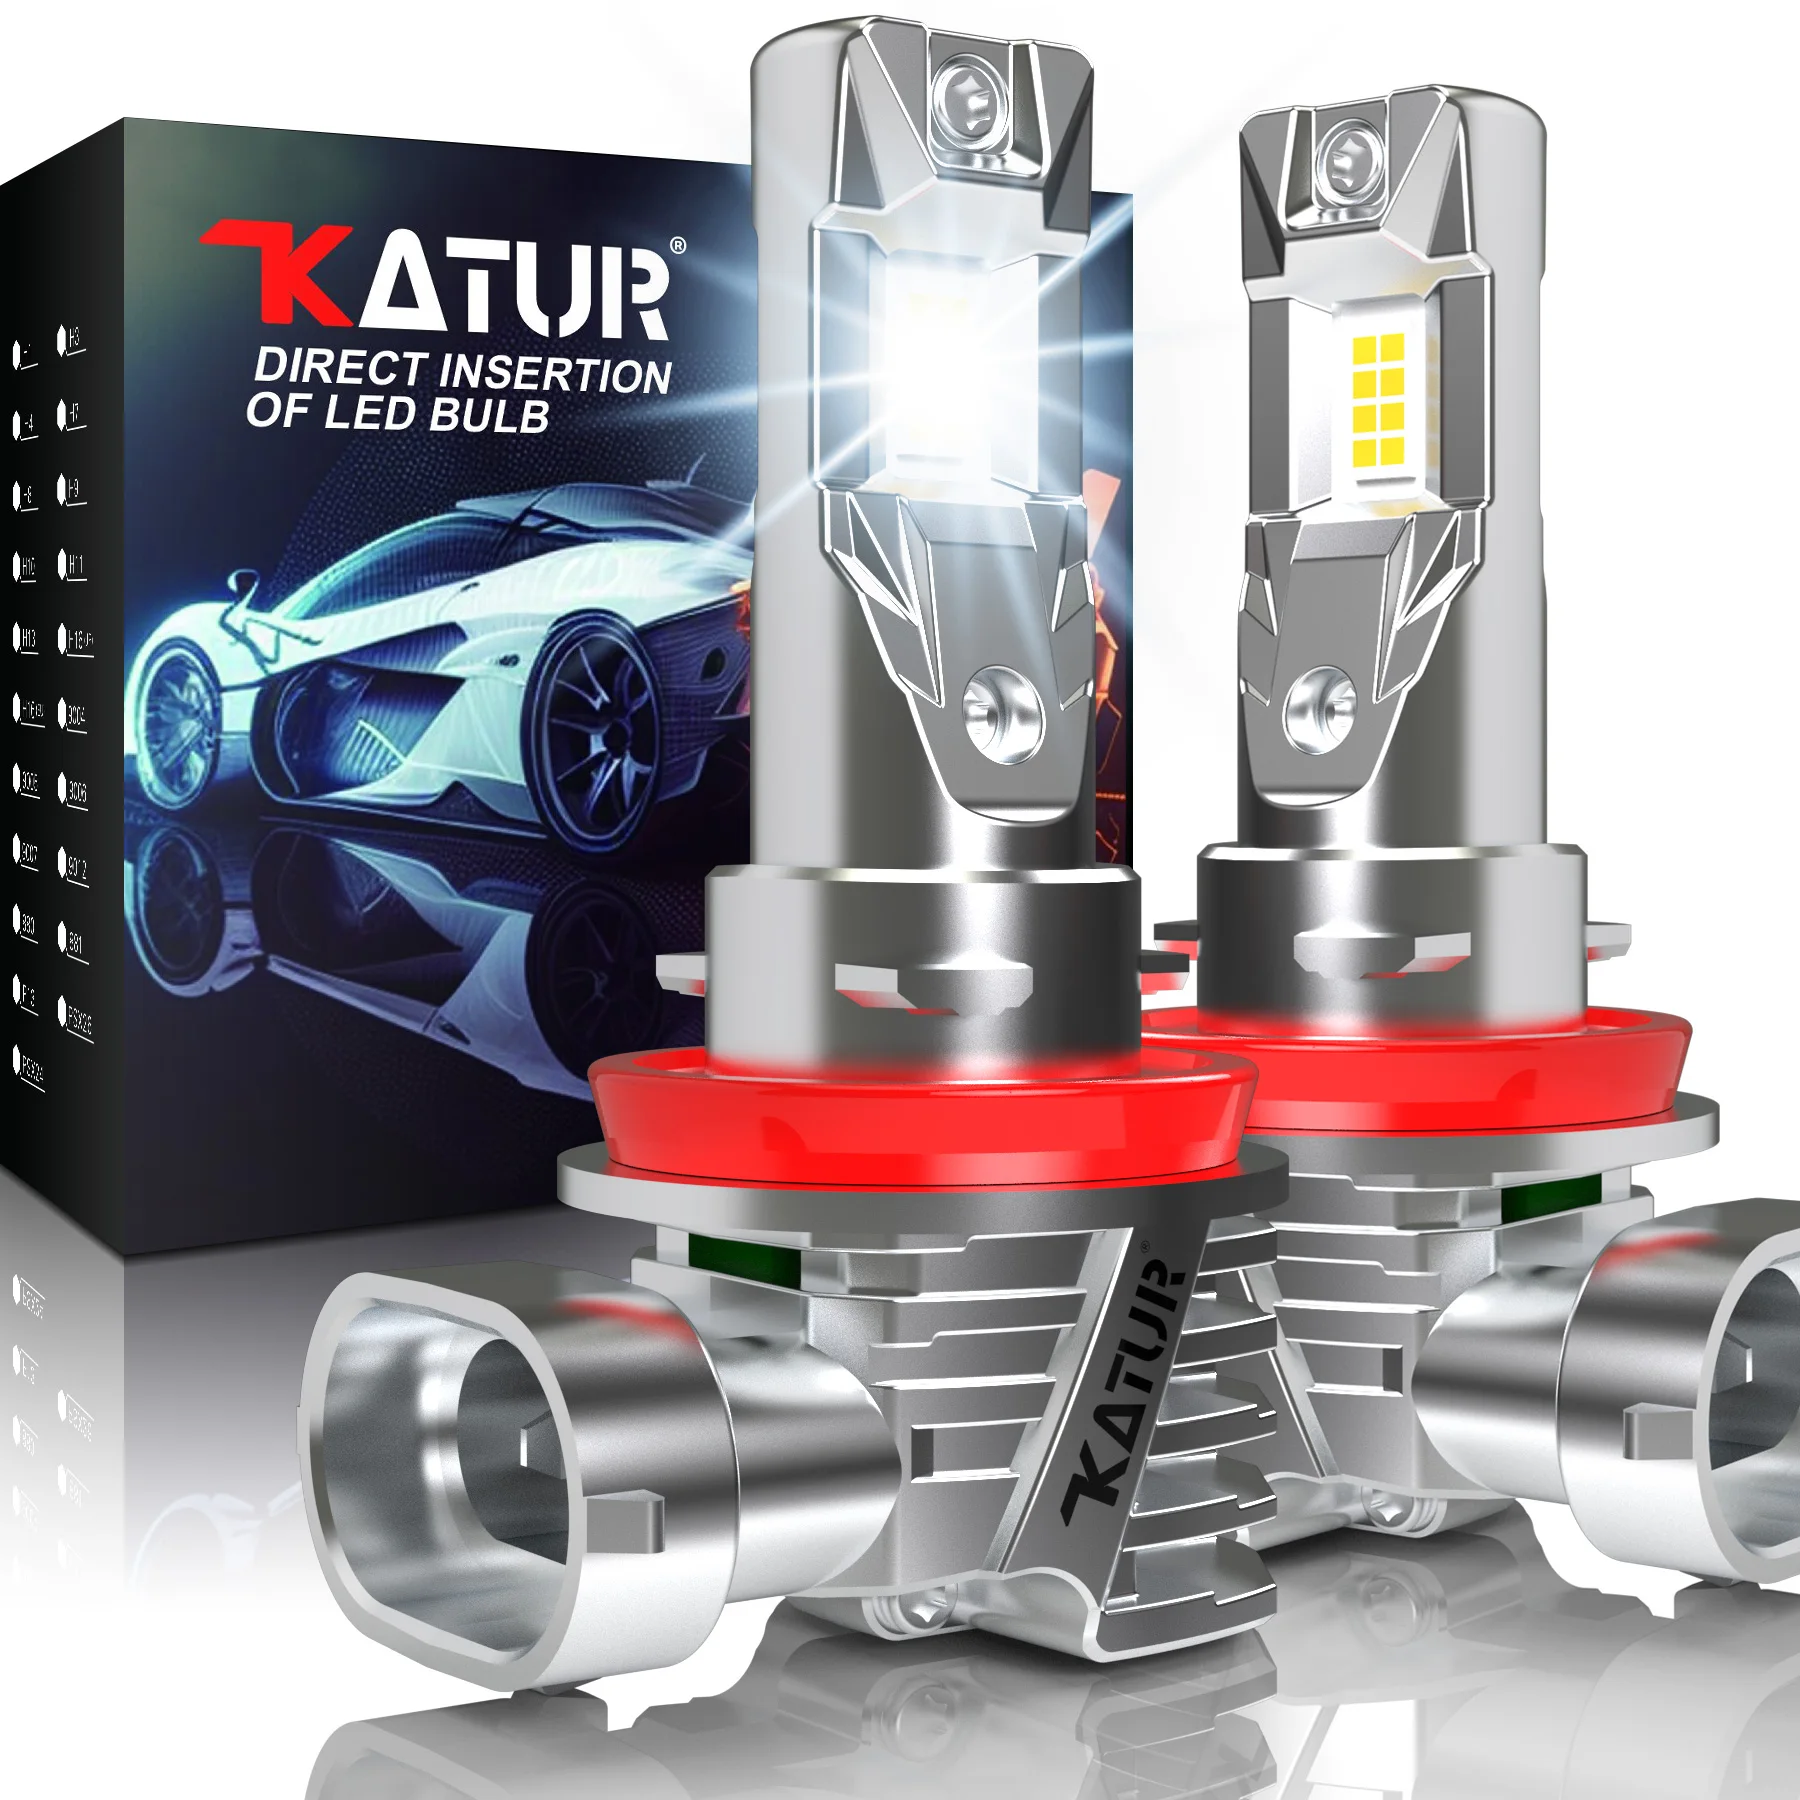 

Katur 2Pcs H11 H8 H9 H16 LED Car Headlight Fog Light Bulbs Car Daytime Running Auto Lamp 6000K White Super Bright High Power